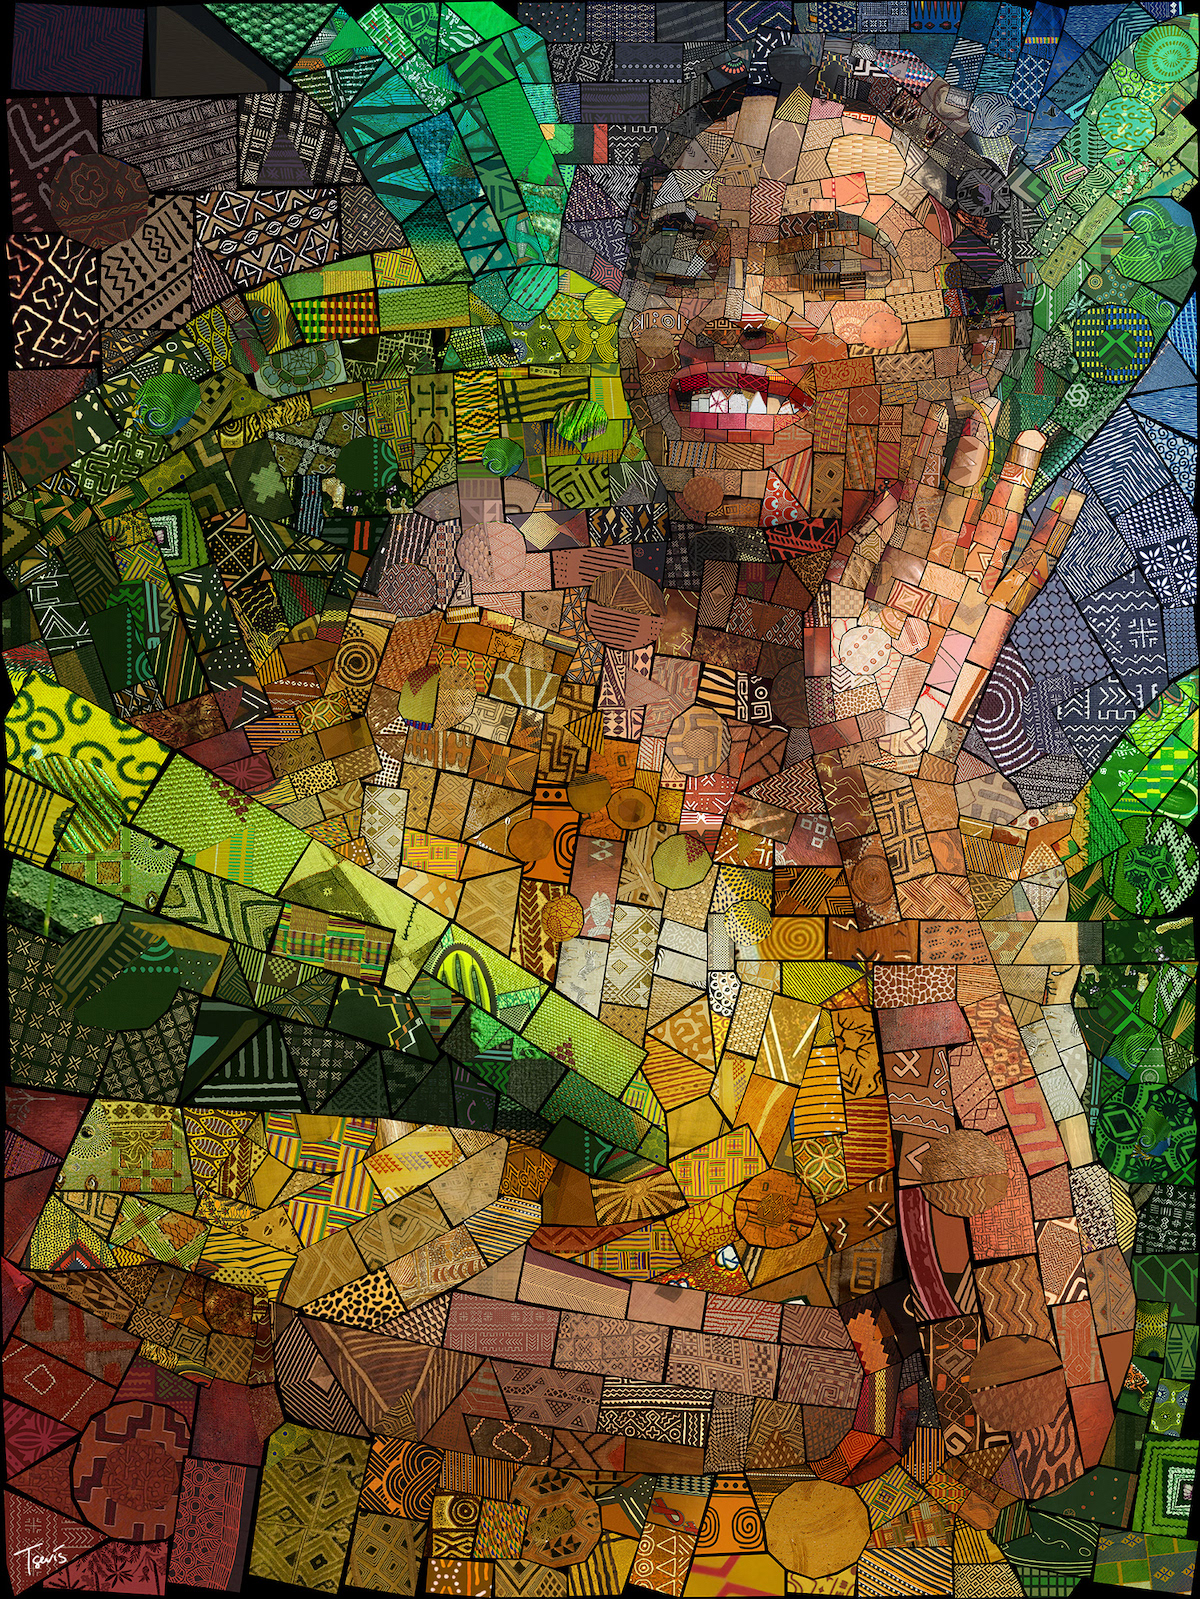 Charis Tsevis African Bricks Mosaic Portrait Art